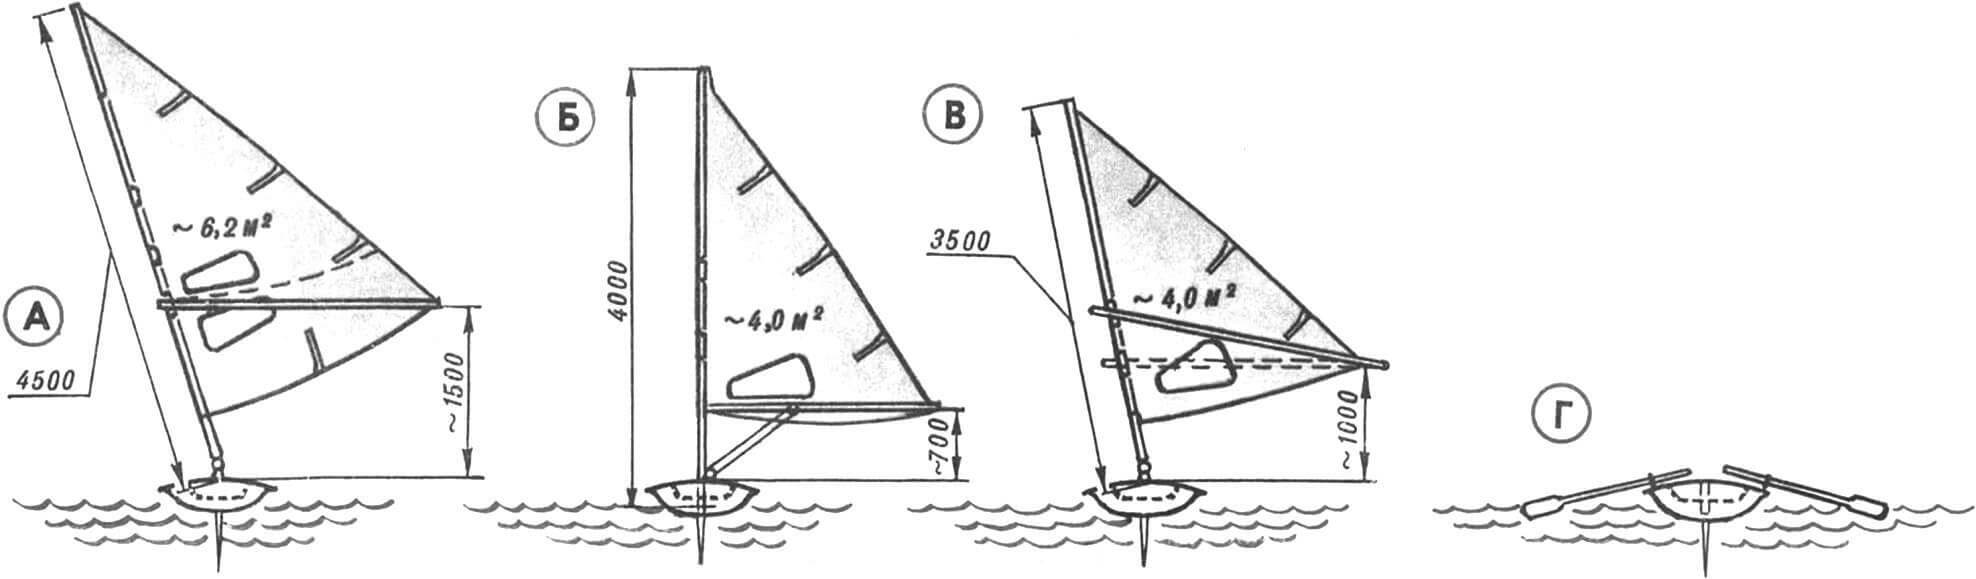 Rice. 1. Options for the Hummingbird sailboard